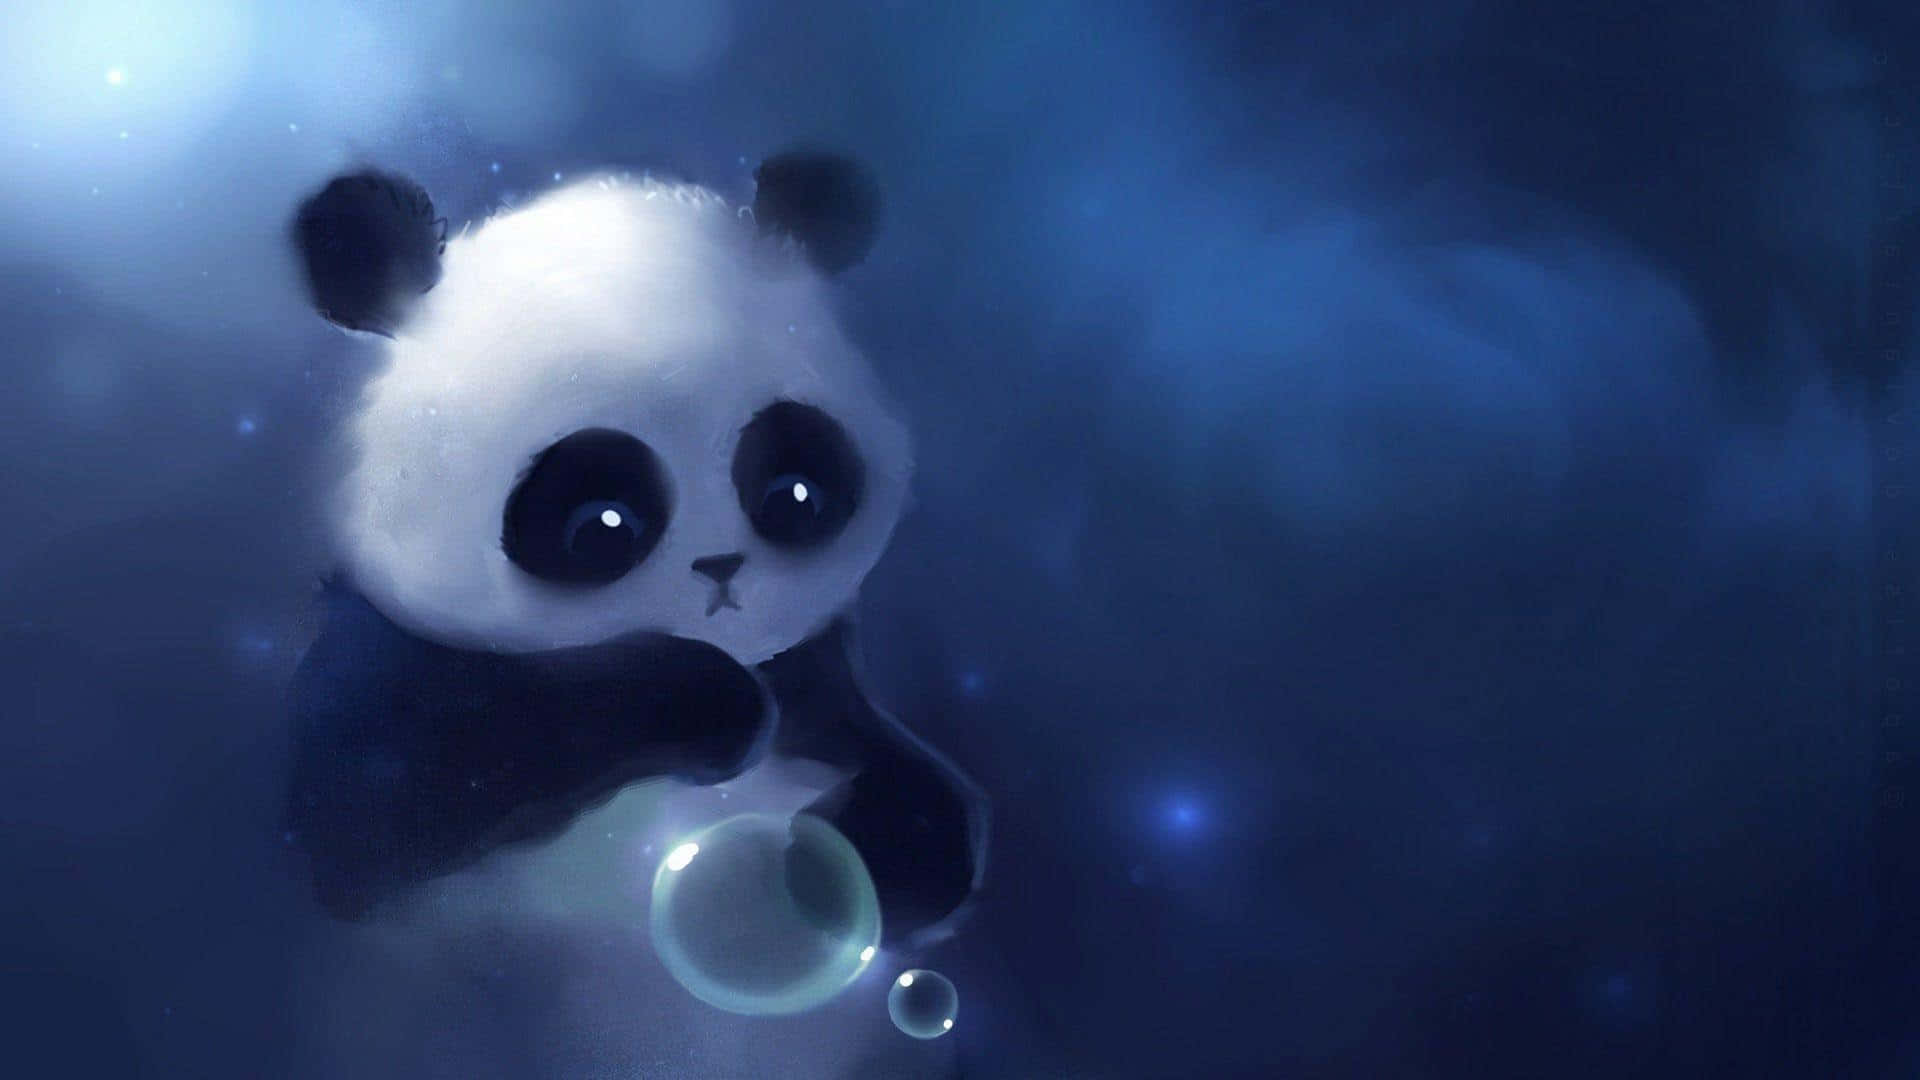 Free Panda Wallpaper Downloads, [400+] Panda Wallpapers for FREE |  